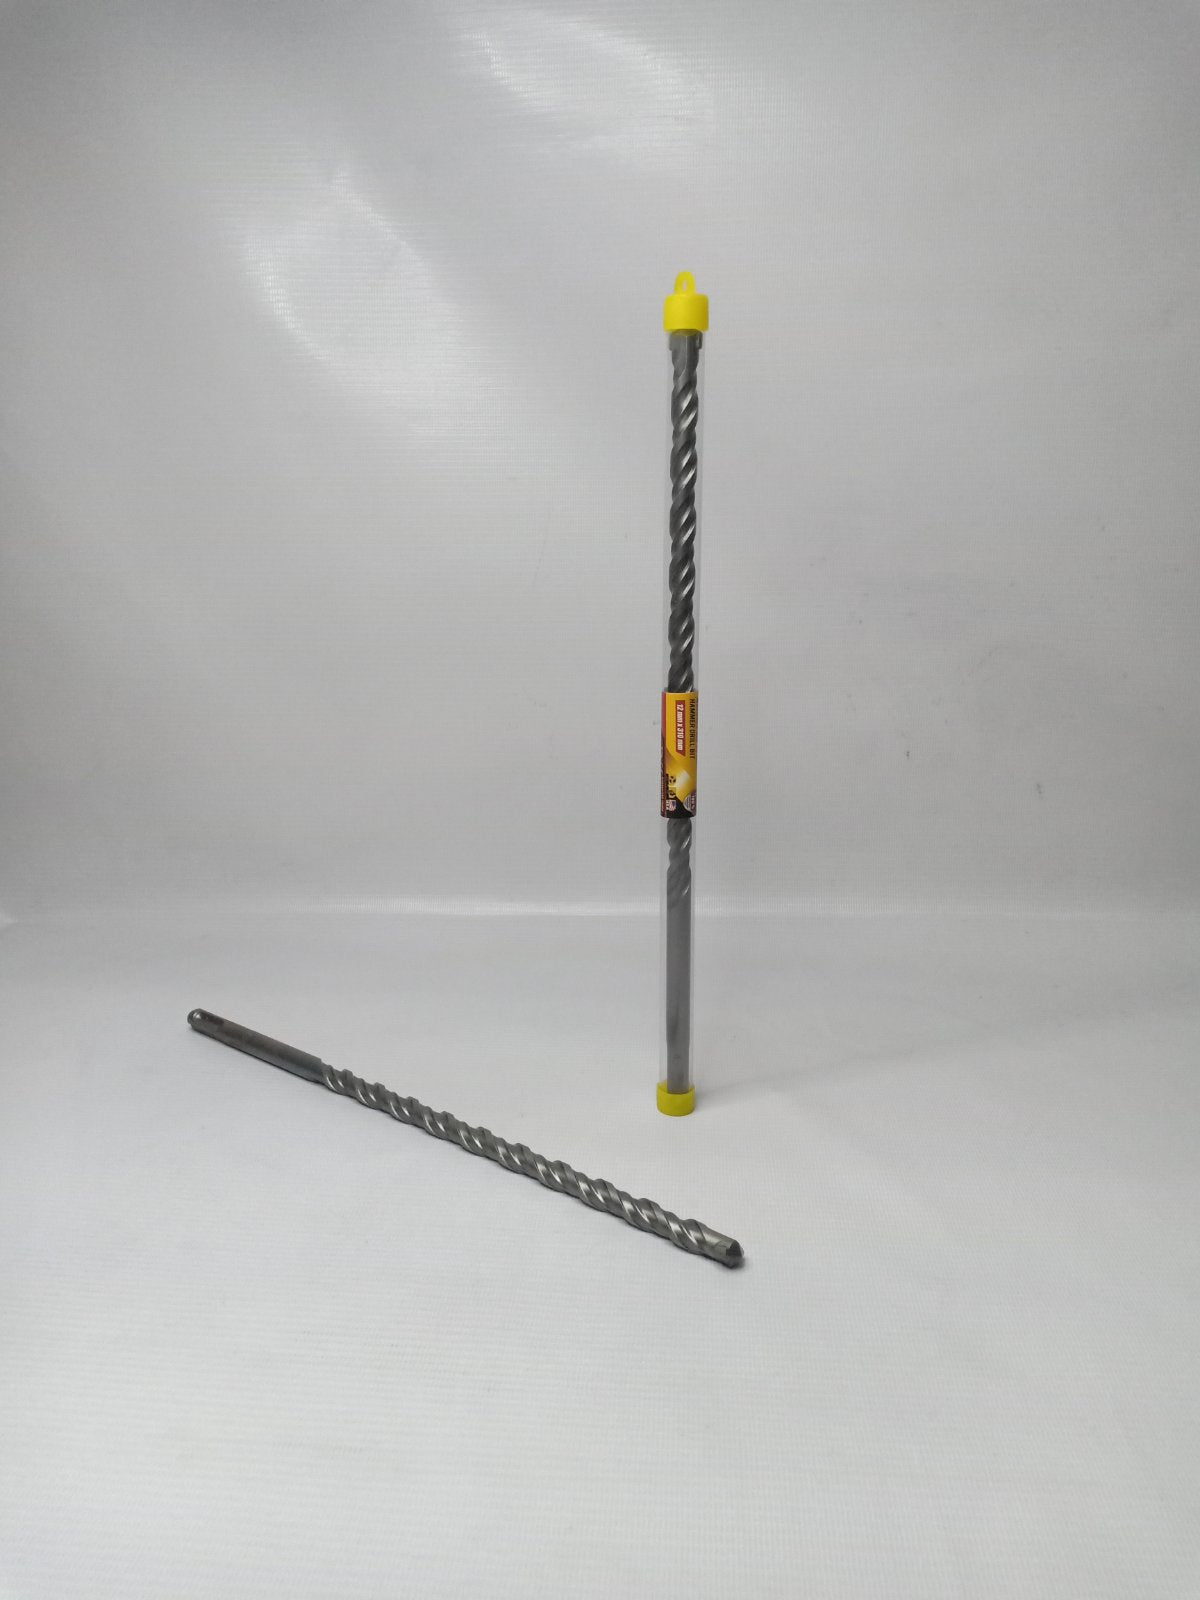 POWERHOUSE Raptor Masonry SDS Drill Bit 12mm x 310mm (for Concrete)